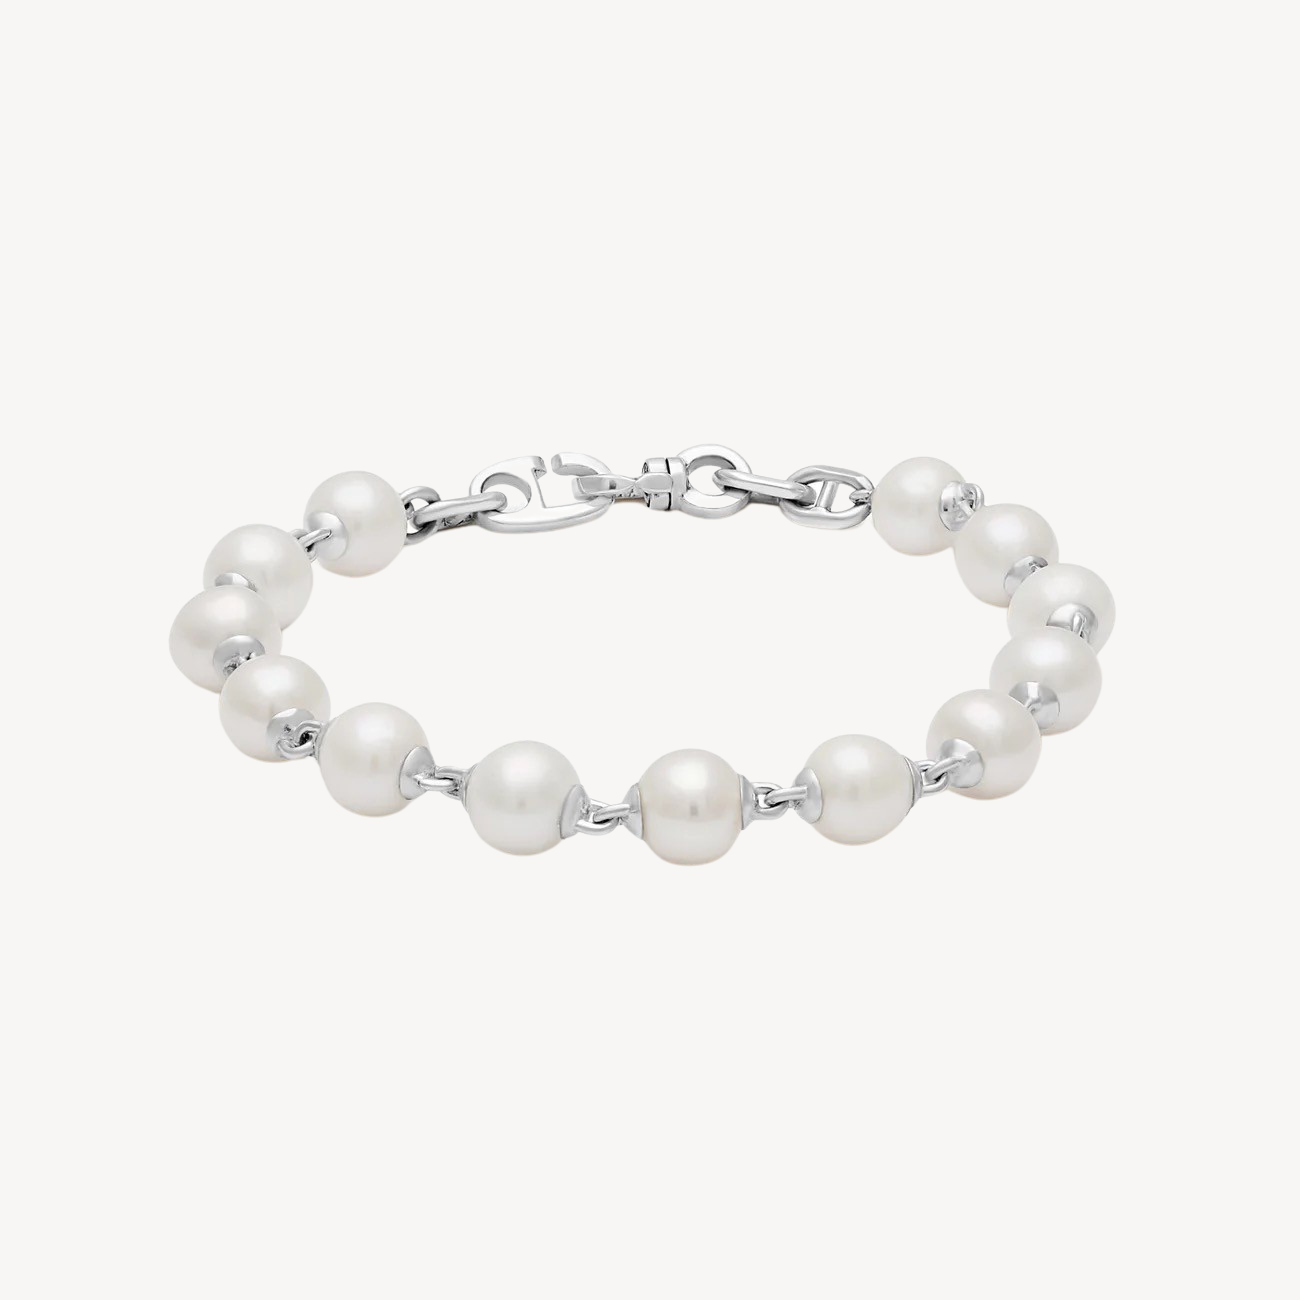 Consi Armband Weiße Perlen Groß